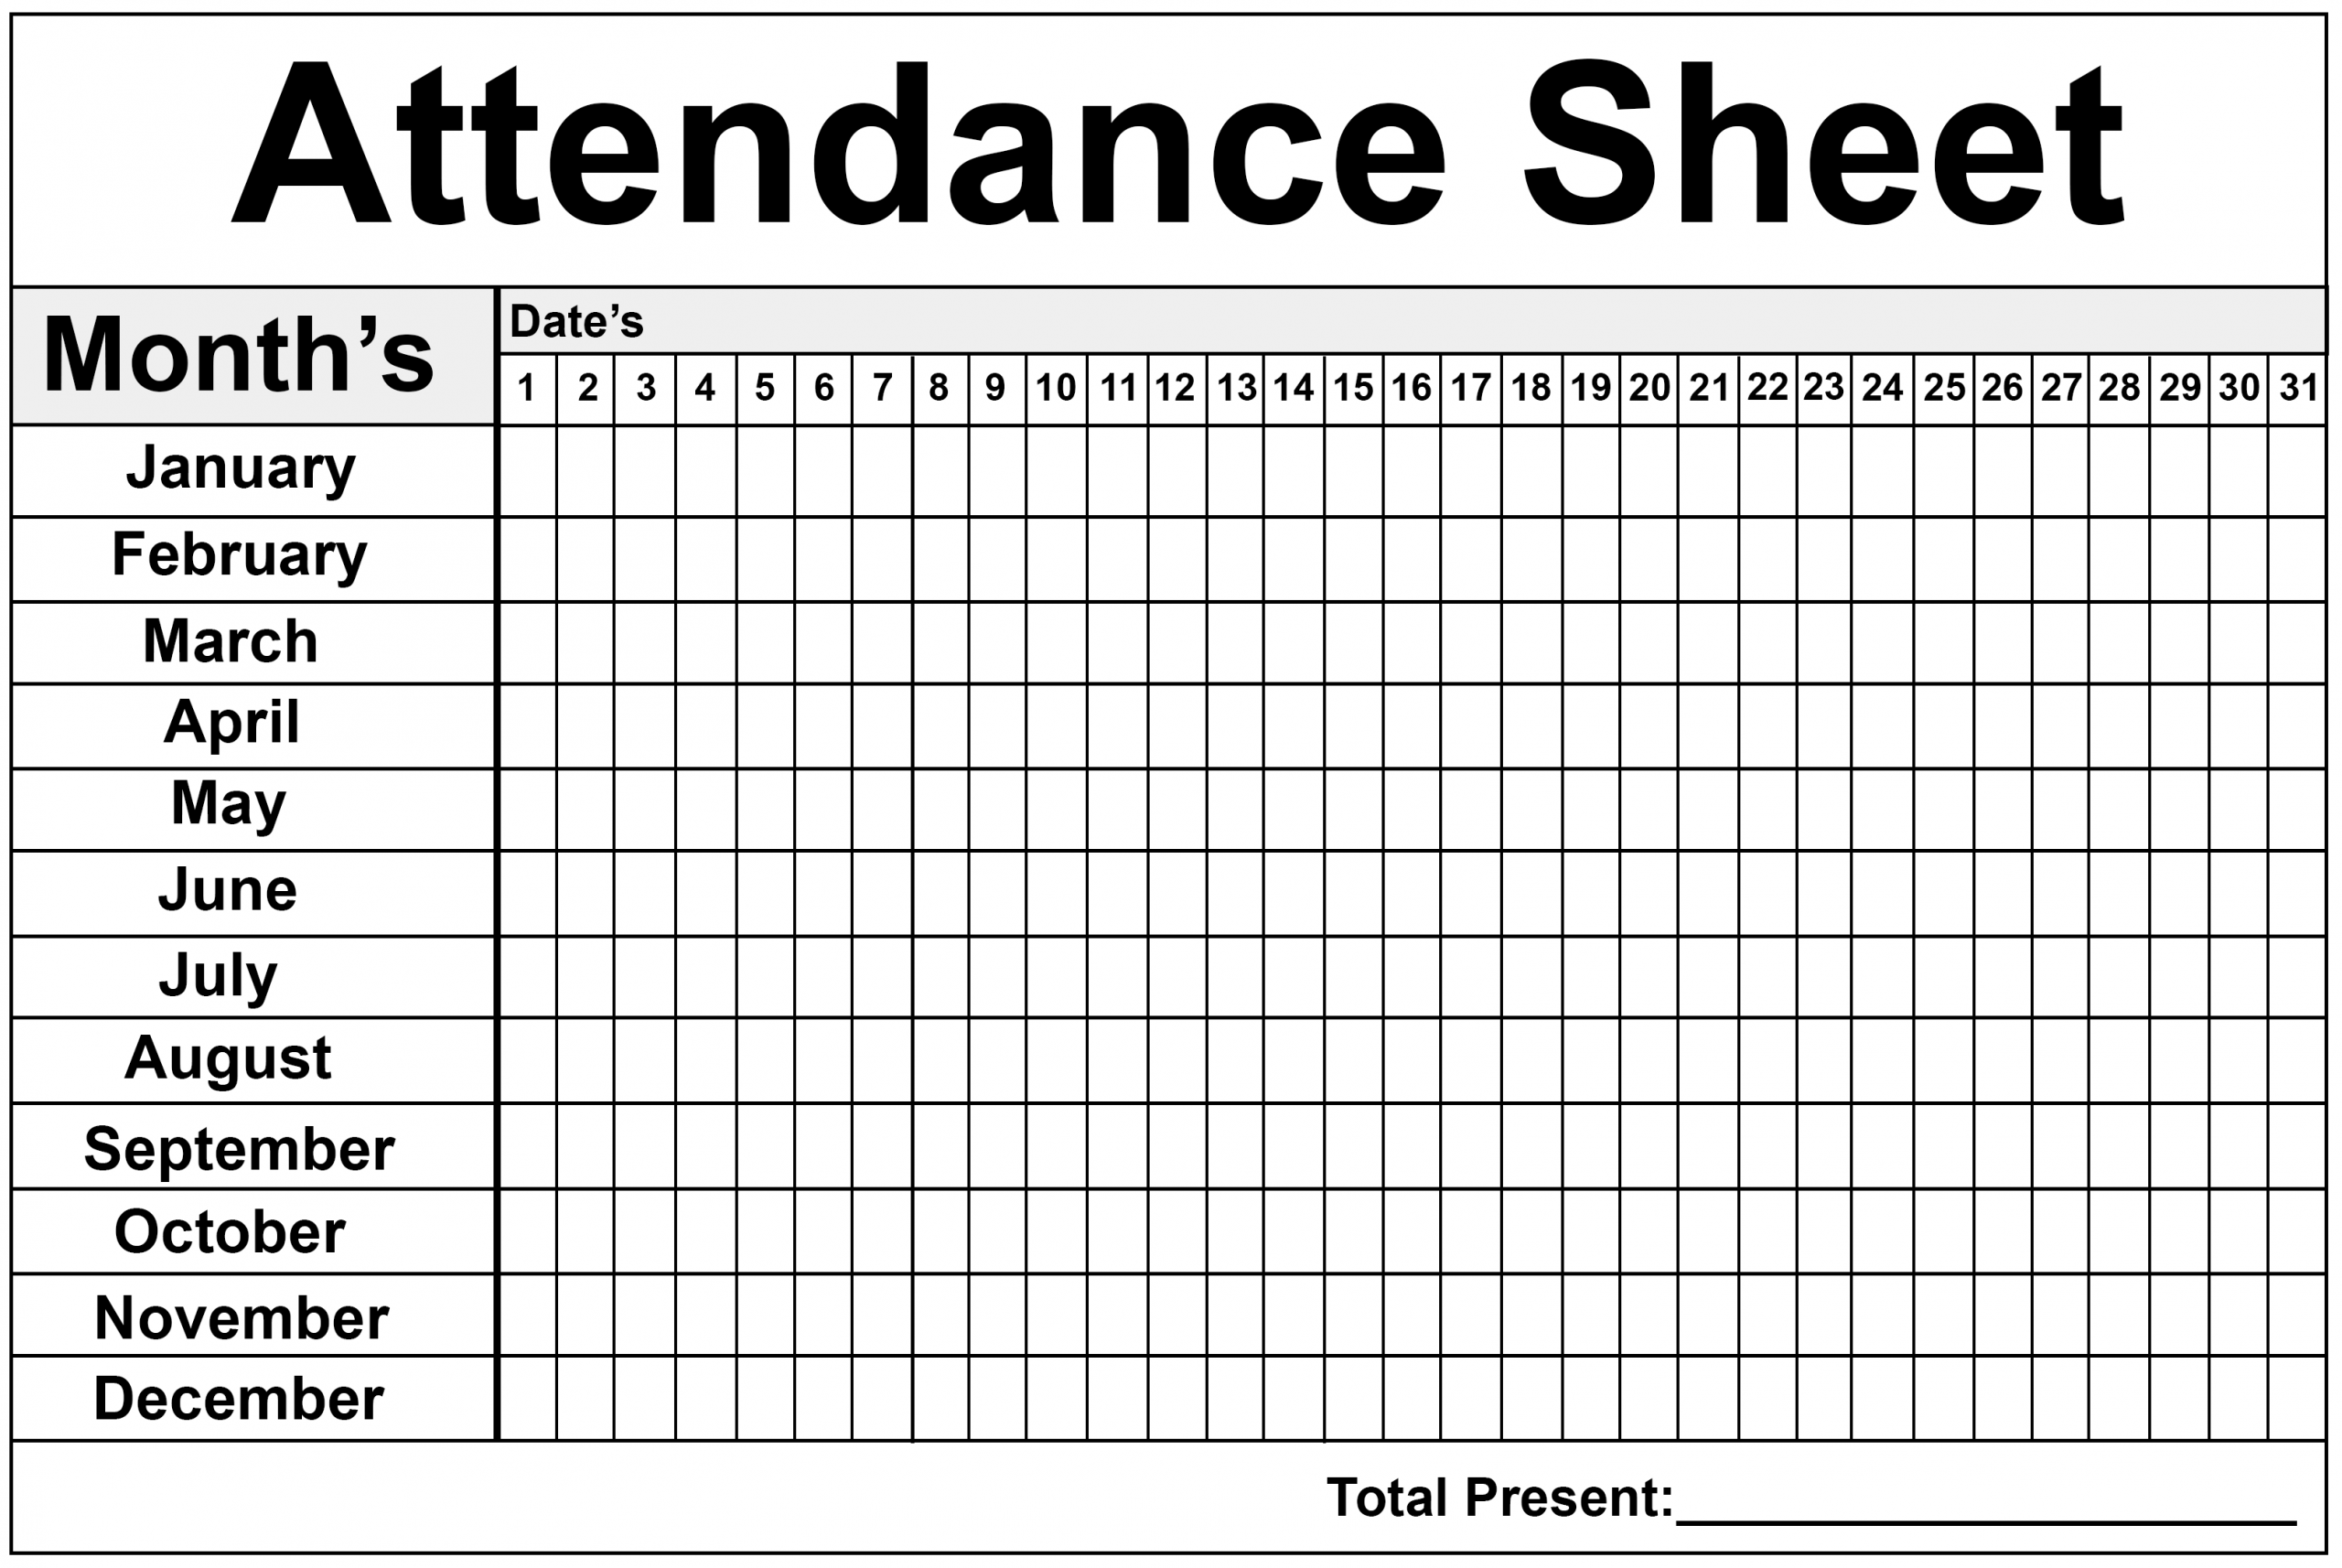 Employee Attendance Tracker Sheet 2019 | Printable Calendar Diy